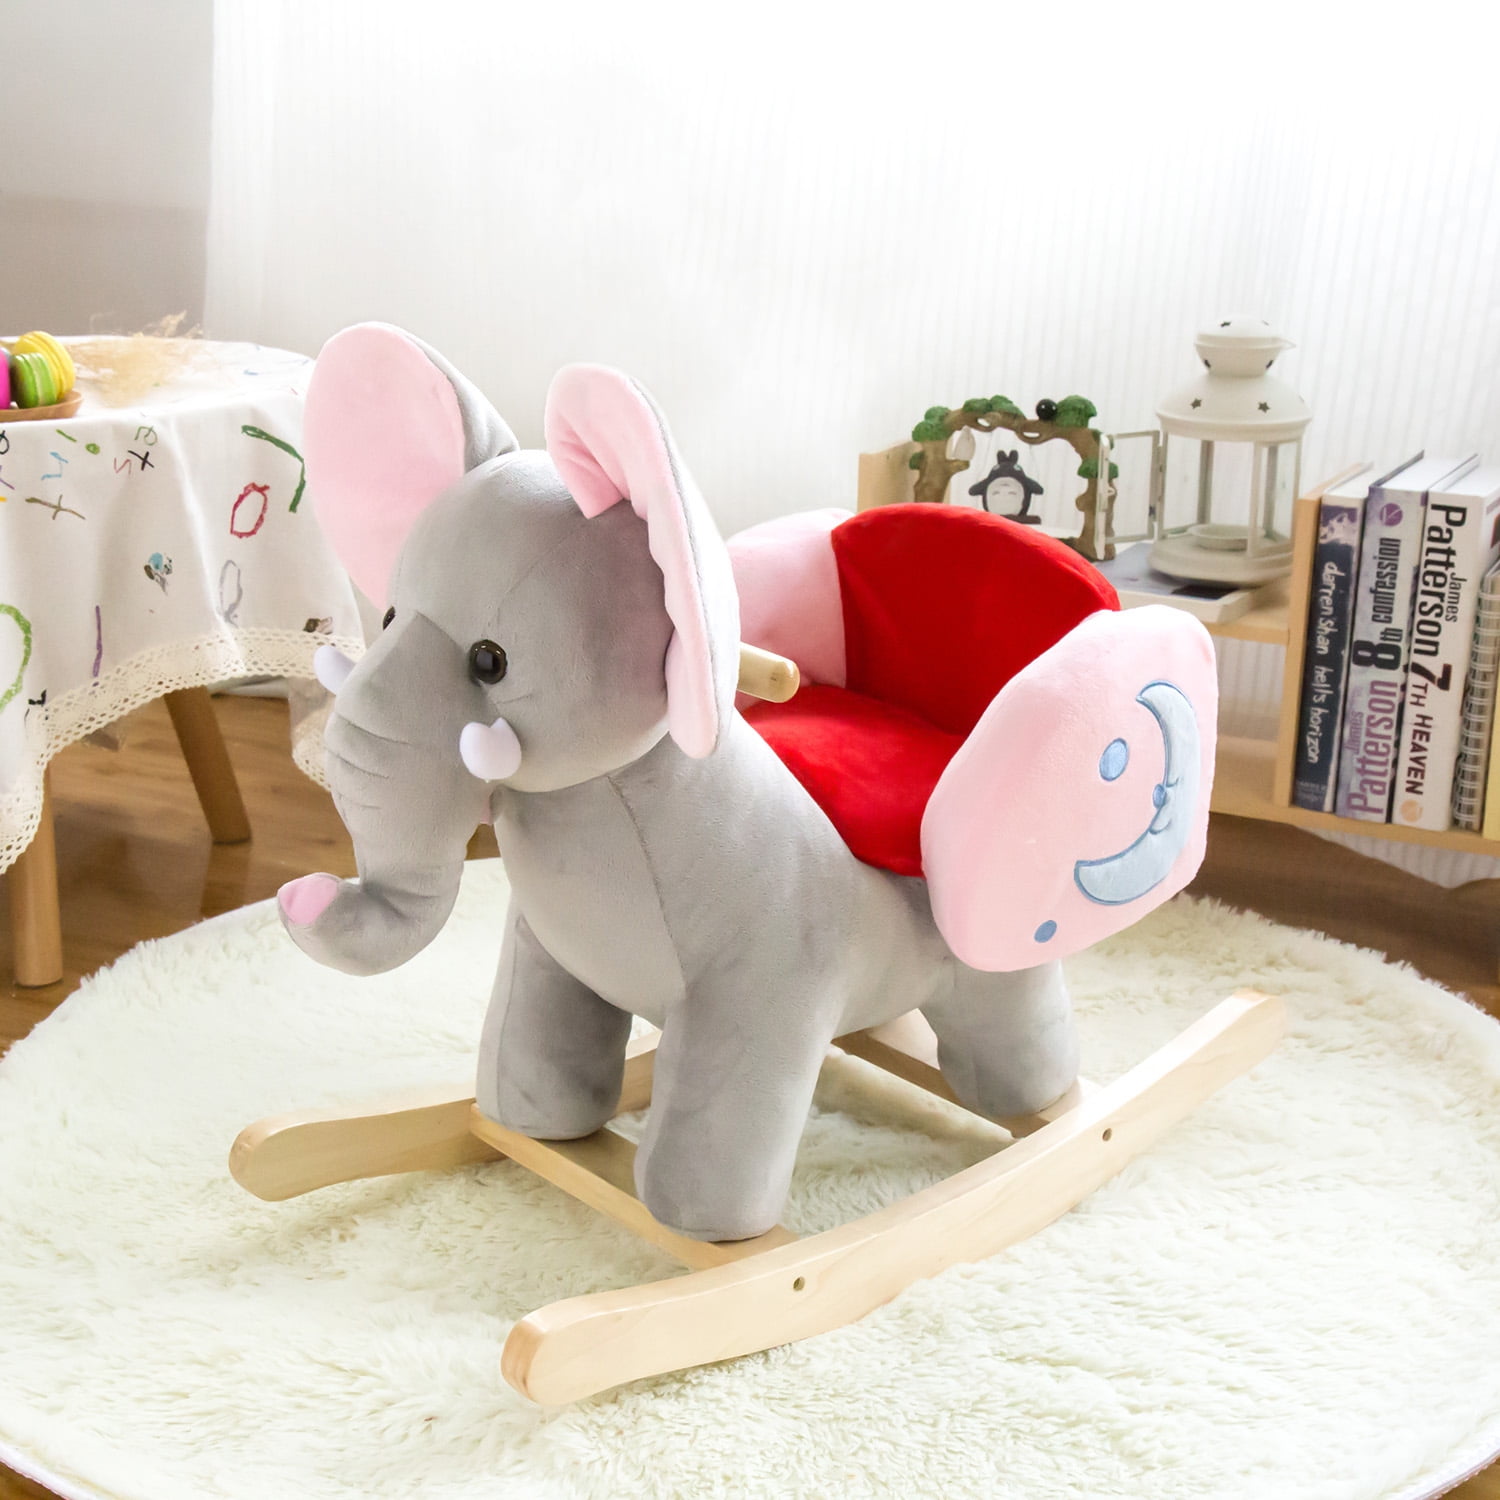 Happy Trails Elephant Plush Rocking Animal 799959947053 for sale online 